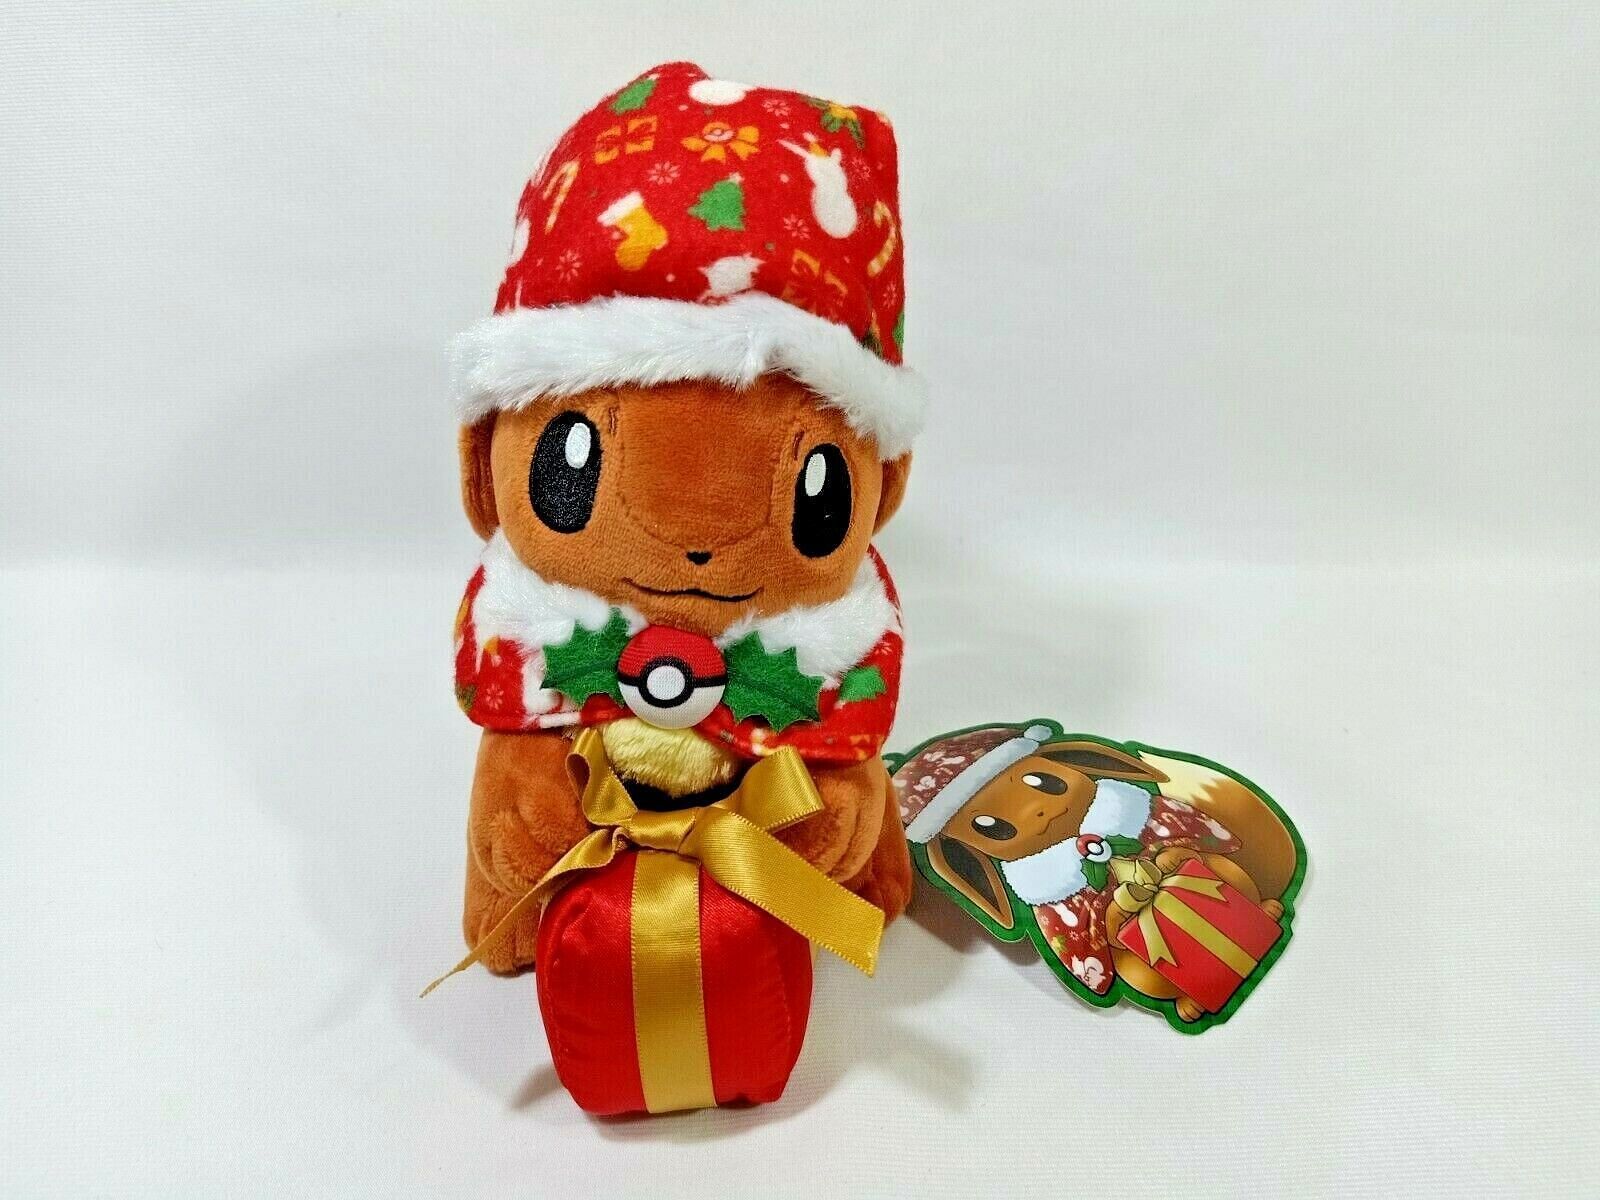 Original Eevee Christmas plush (Image via The Pokemon Company)